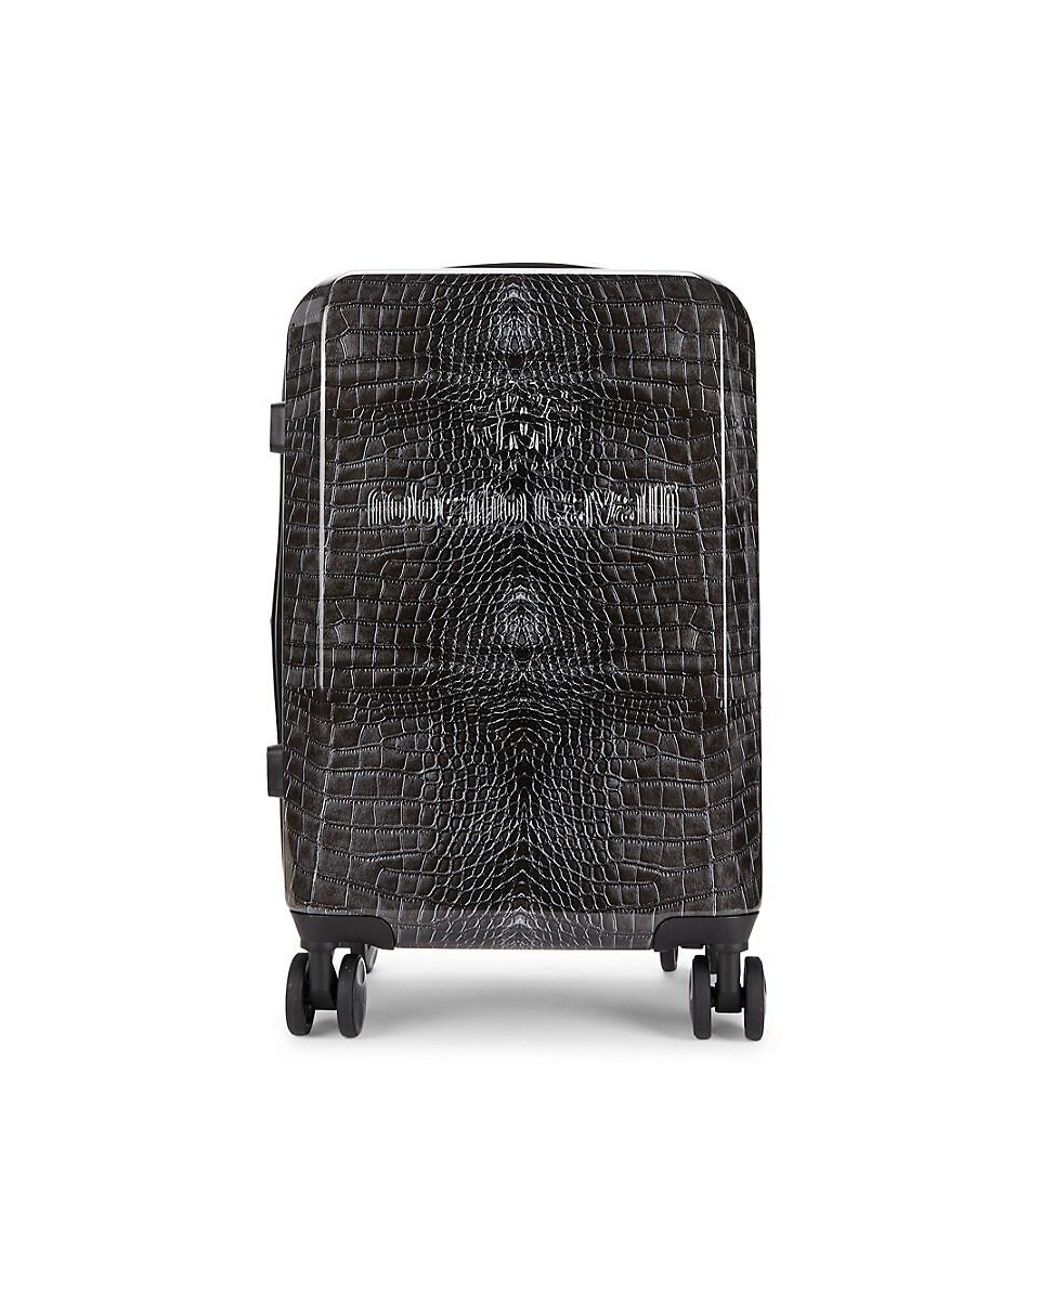 Roberto Cavalli Crocodile Print 20-inch Spinner Suitcase in Black | Lyst